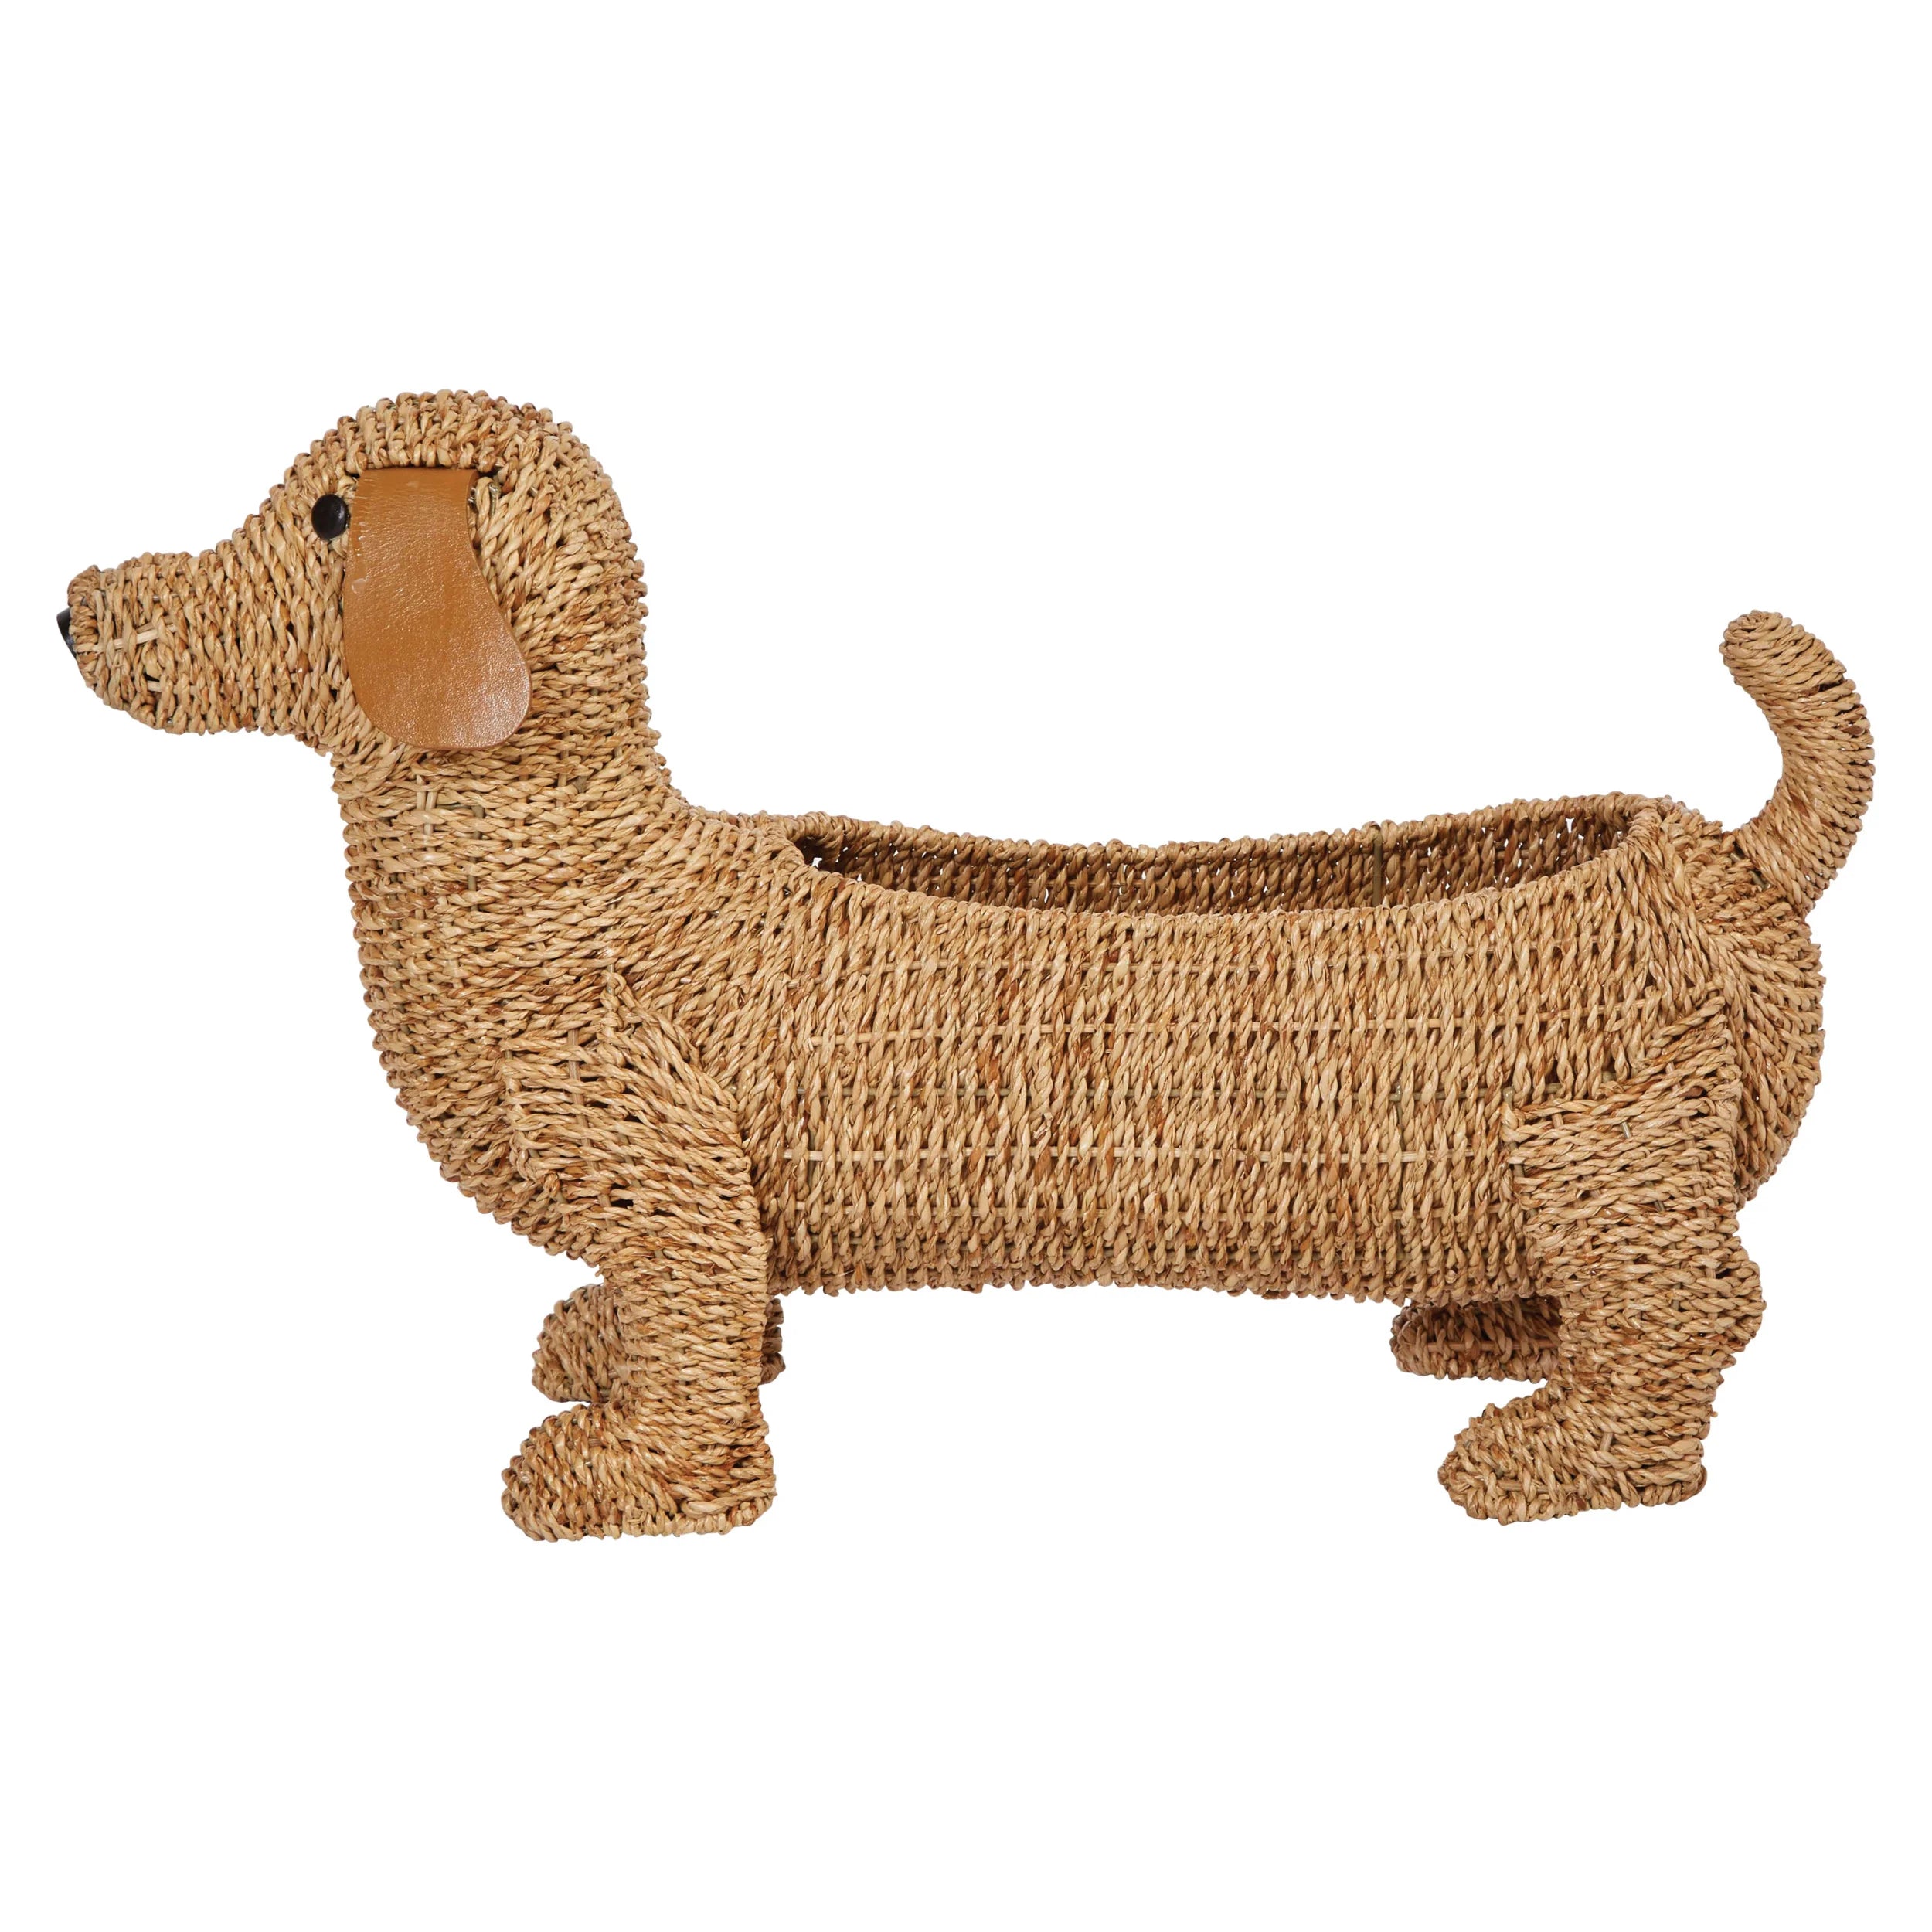 Hand-Woven Dog Basket